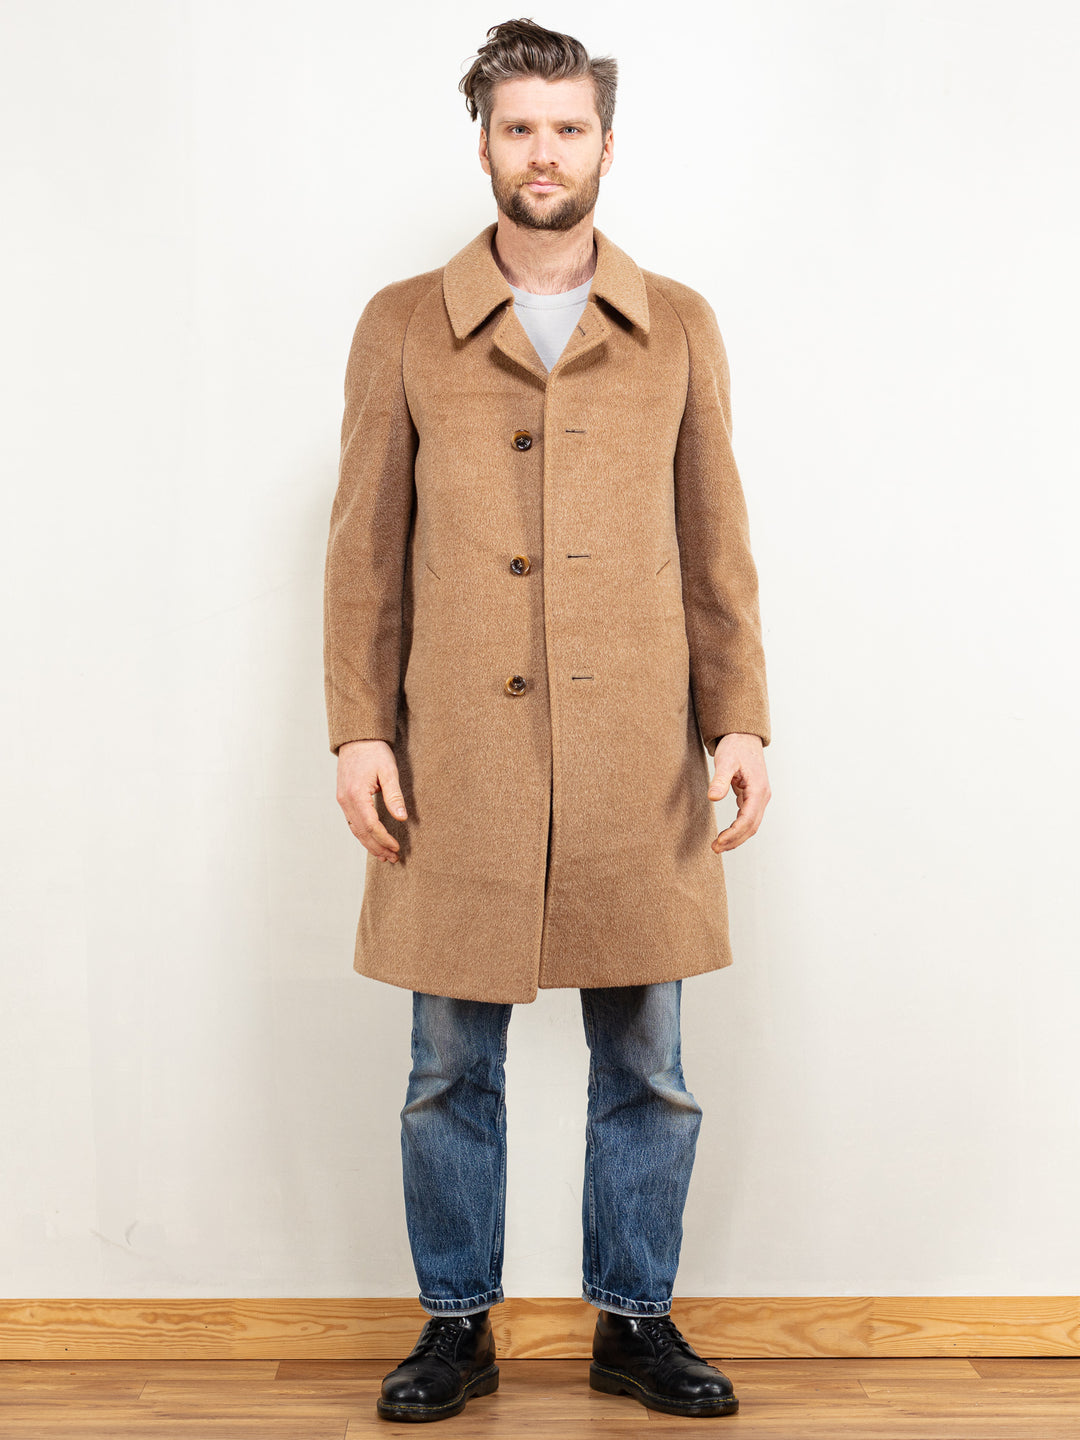 Men Wool Coat 80s vintage men beige wool mohair coat classy men coat minimalist style clothing minimalistic preppy men style size small S